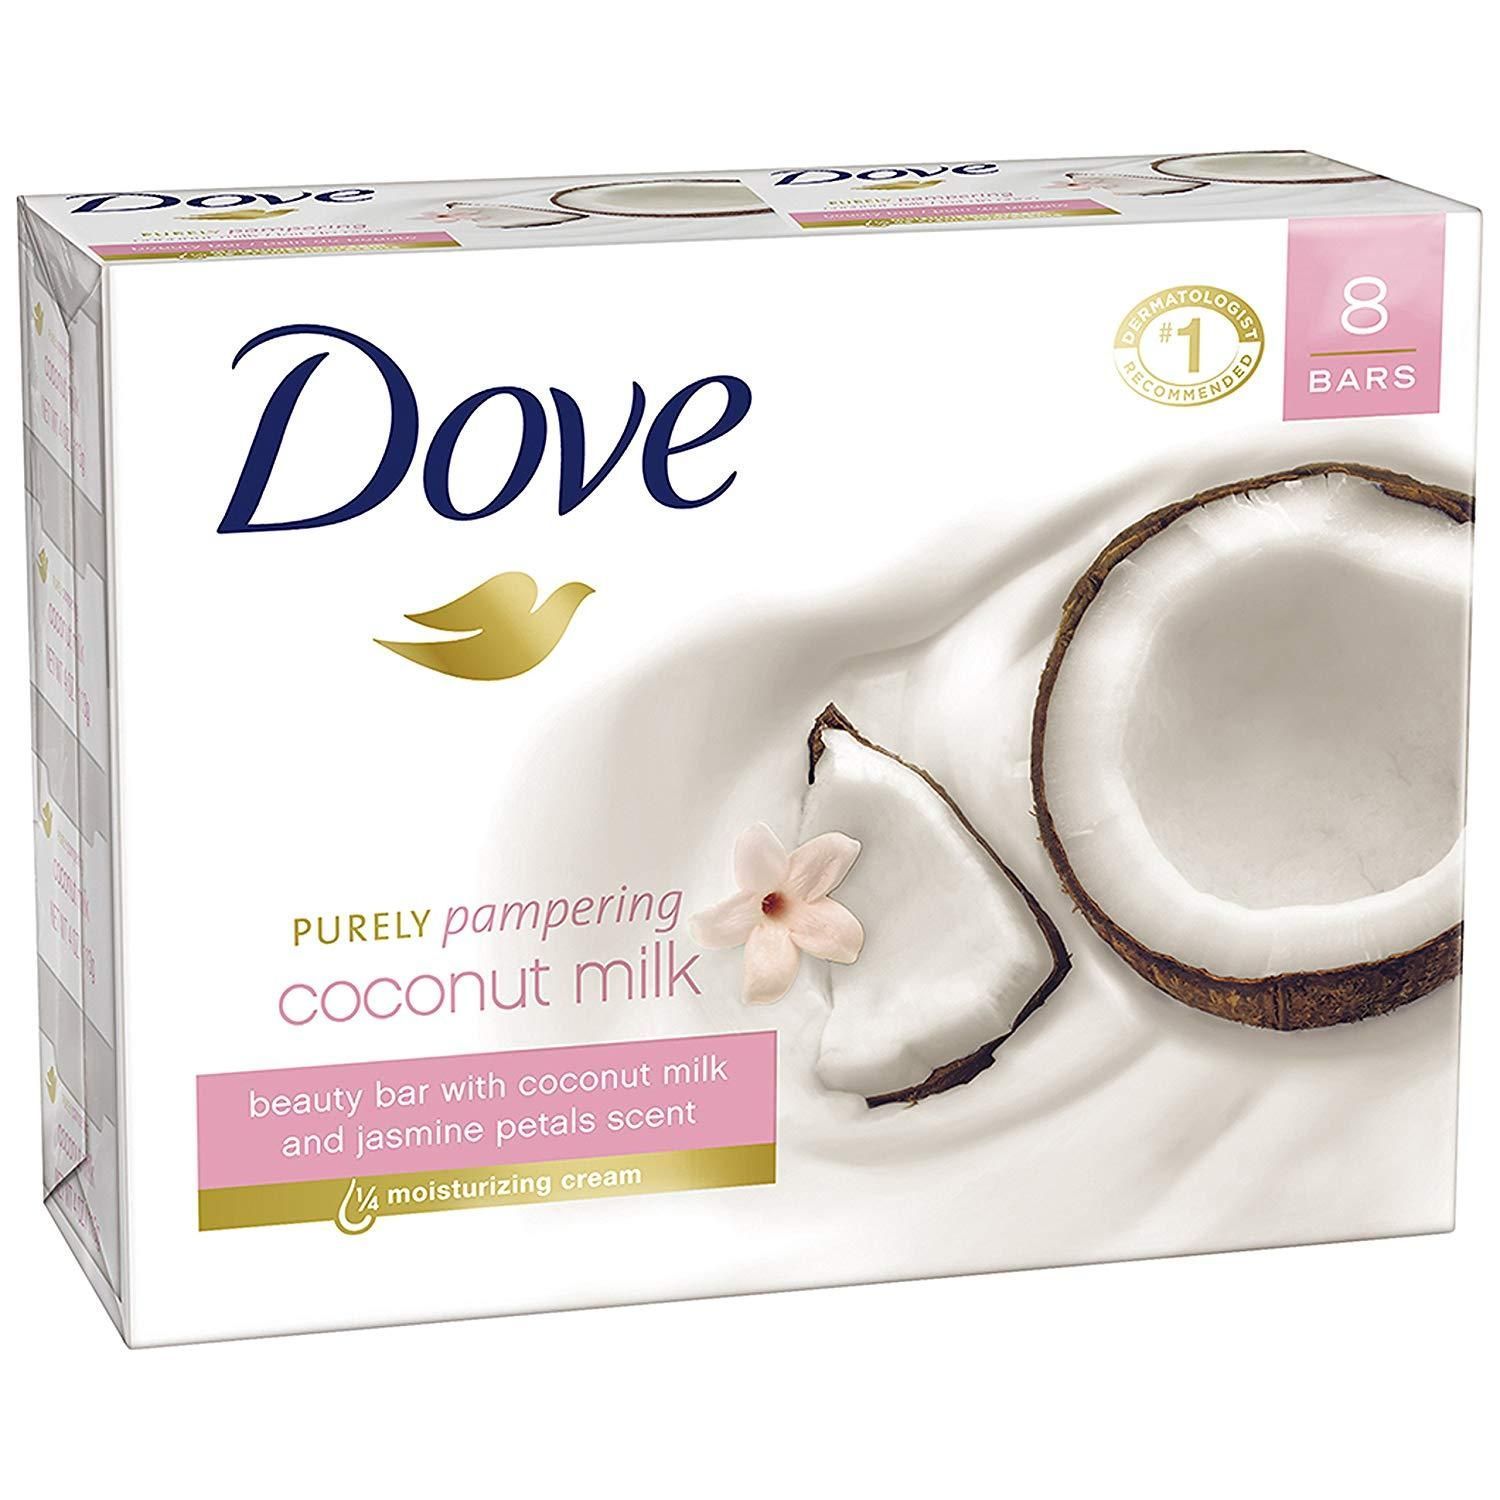 Dove Purely Pampering Coconut Milk Bar Soap, 100g - Dove Purely Pampering Coconut Milk Bar Soap, 100g -   13 dove beauty Bar ideas